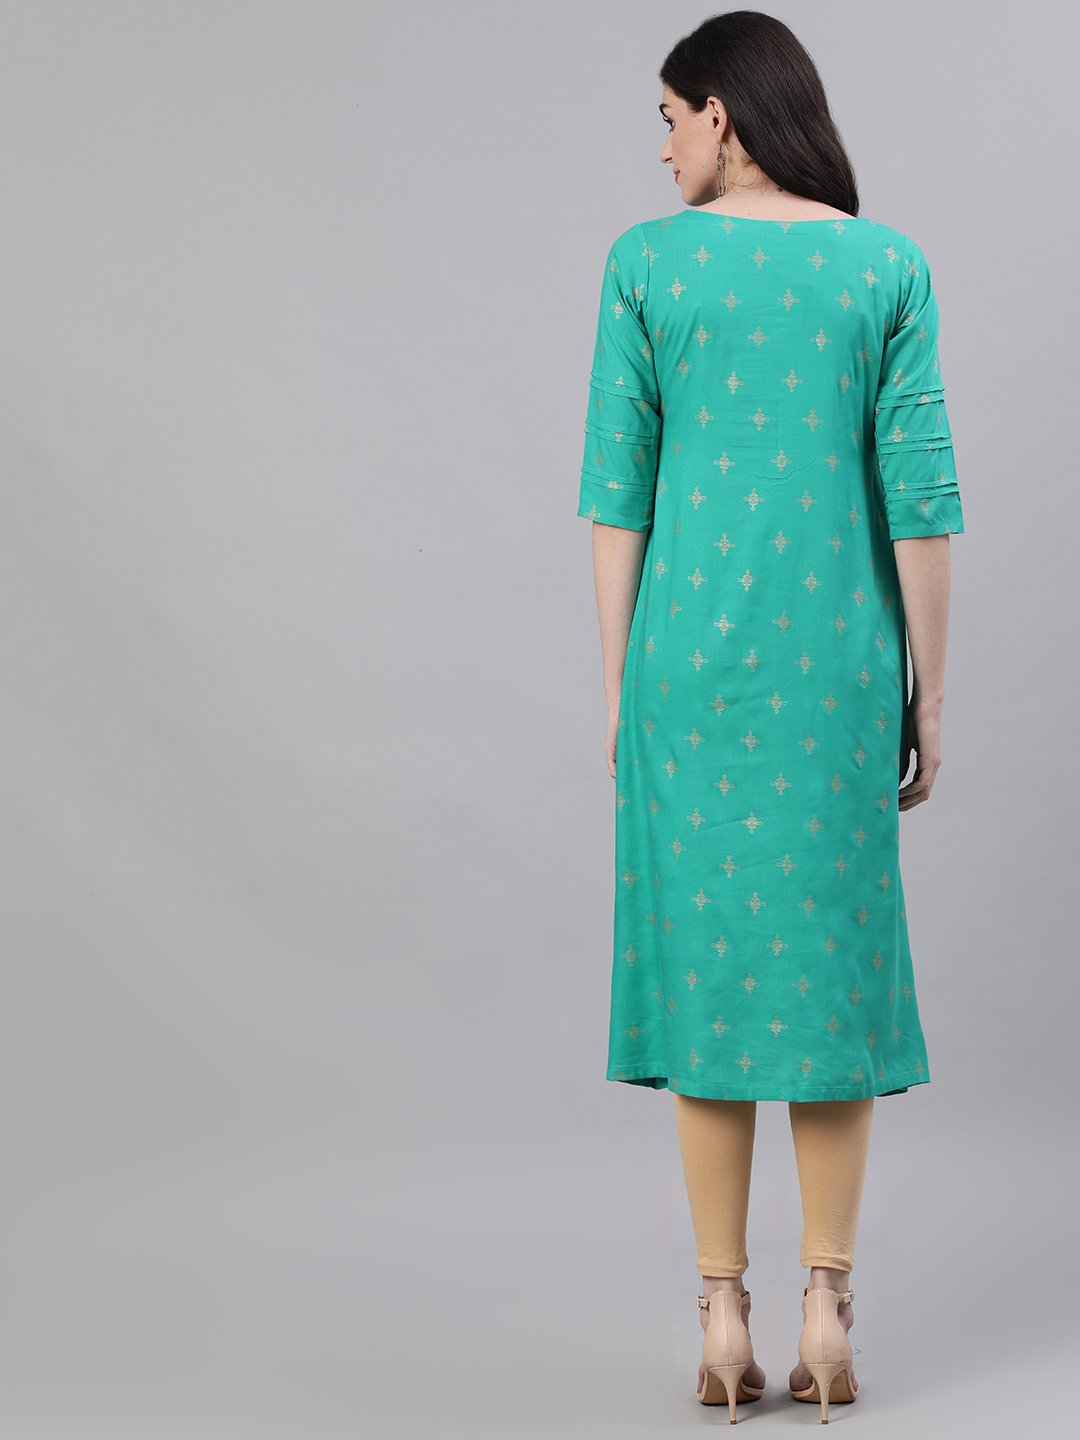 Women's Green Calf Length Three-Quarter Sleeves A-Line Ethnic Motifs Printed Viscose Rayon Kurta - Nayo Clothing